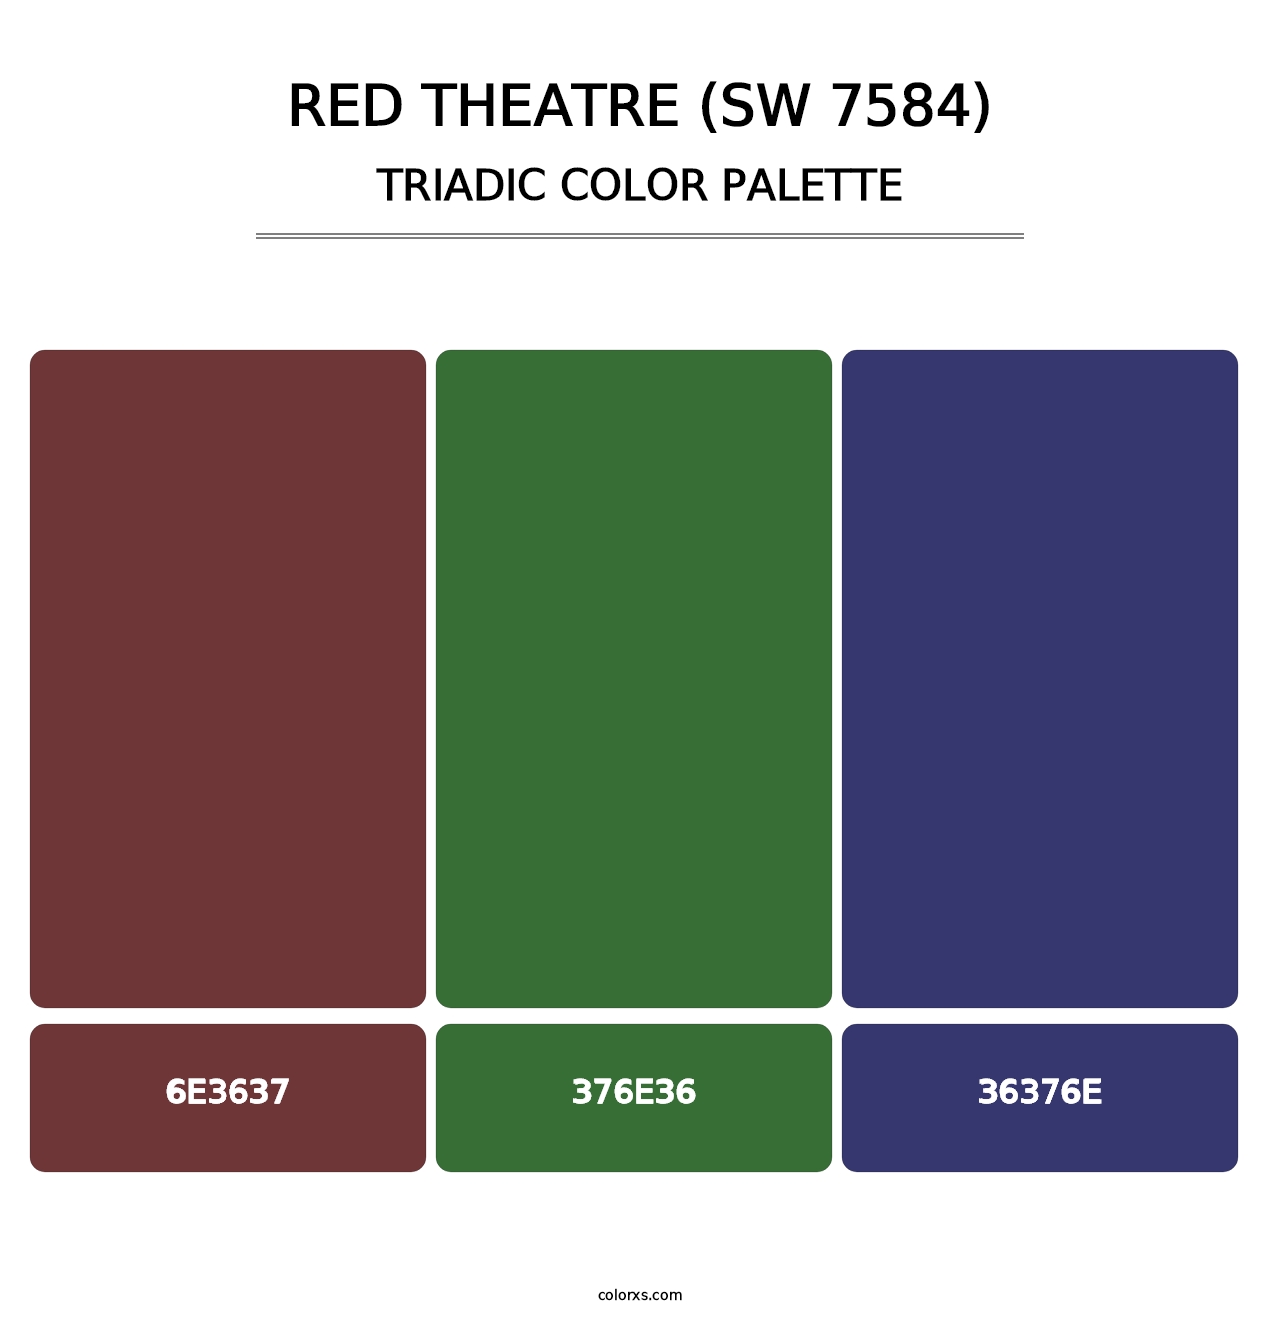 Red Theatre (SW 7584) - Triadic Color Palette